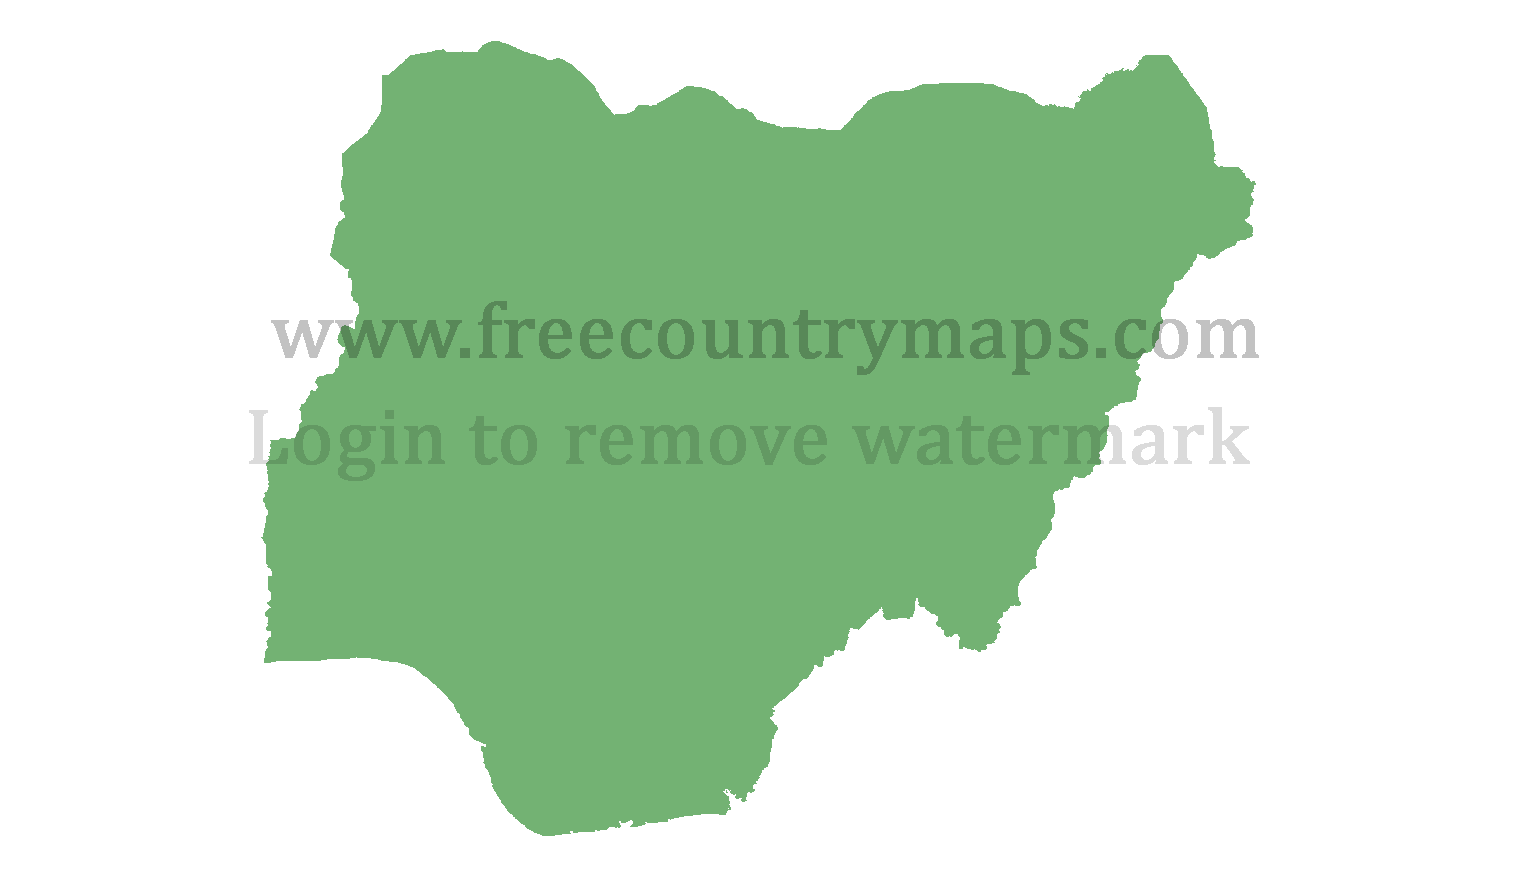 Blank Map of Nigeria